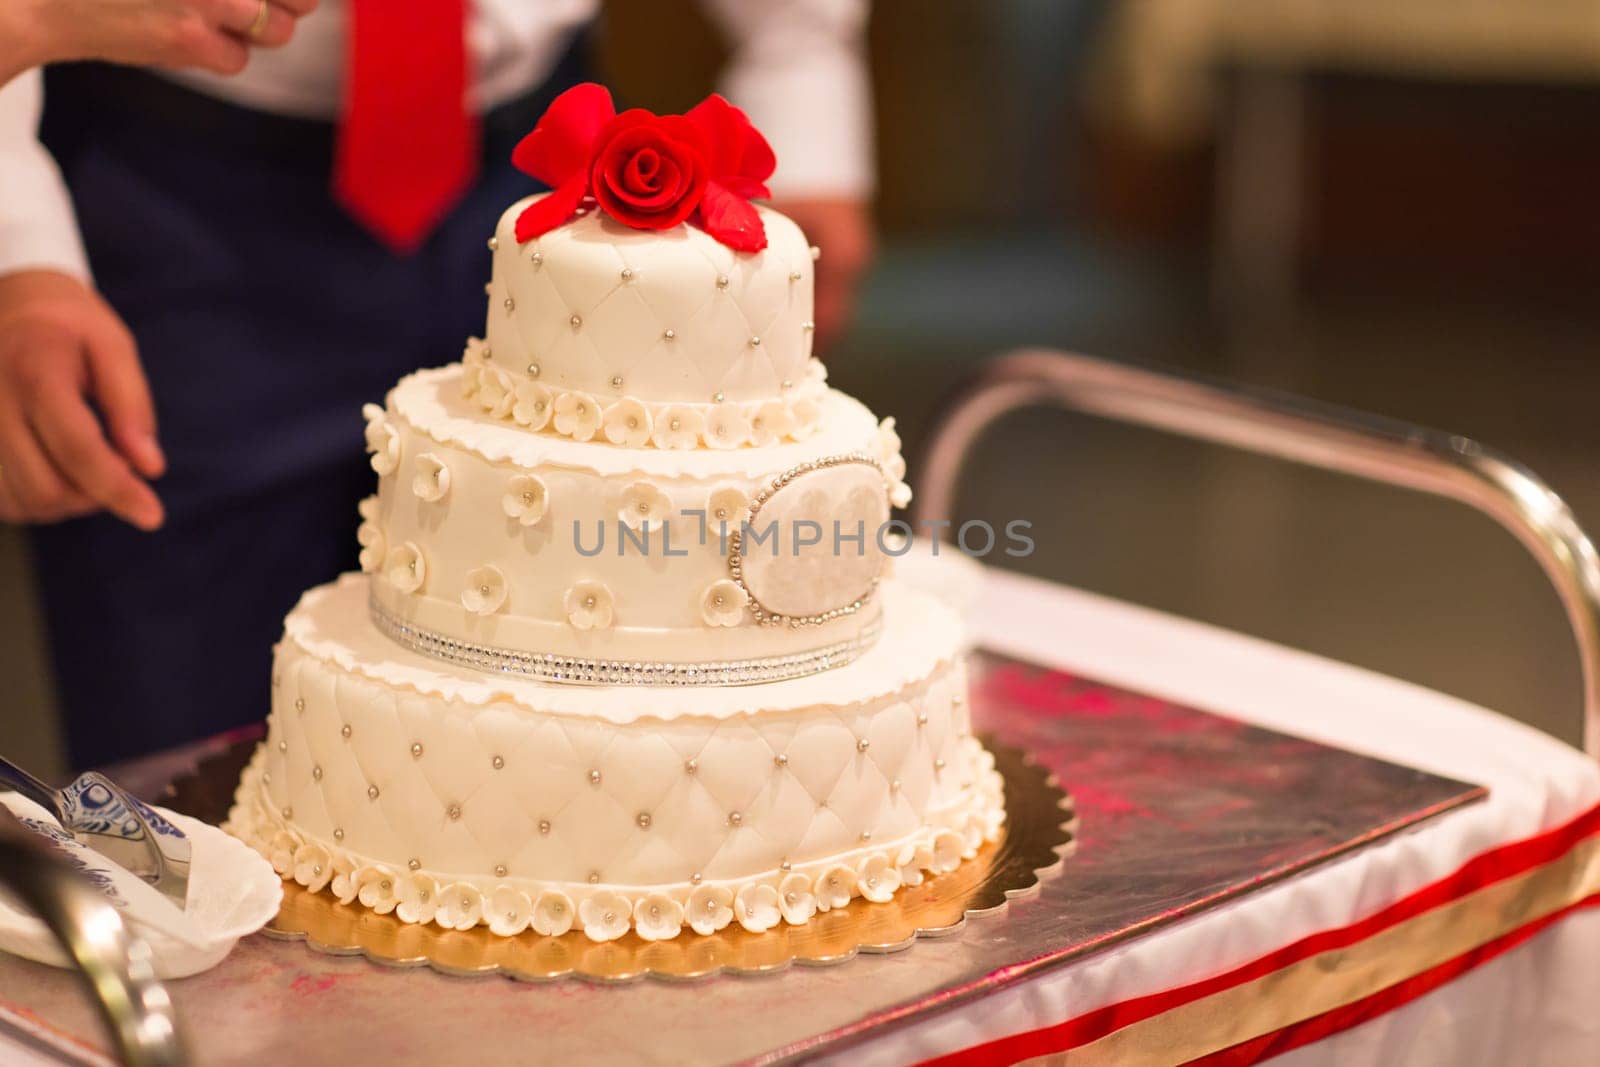 White Wedding Cake by Satura86